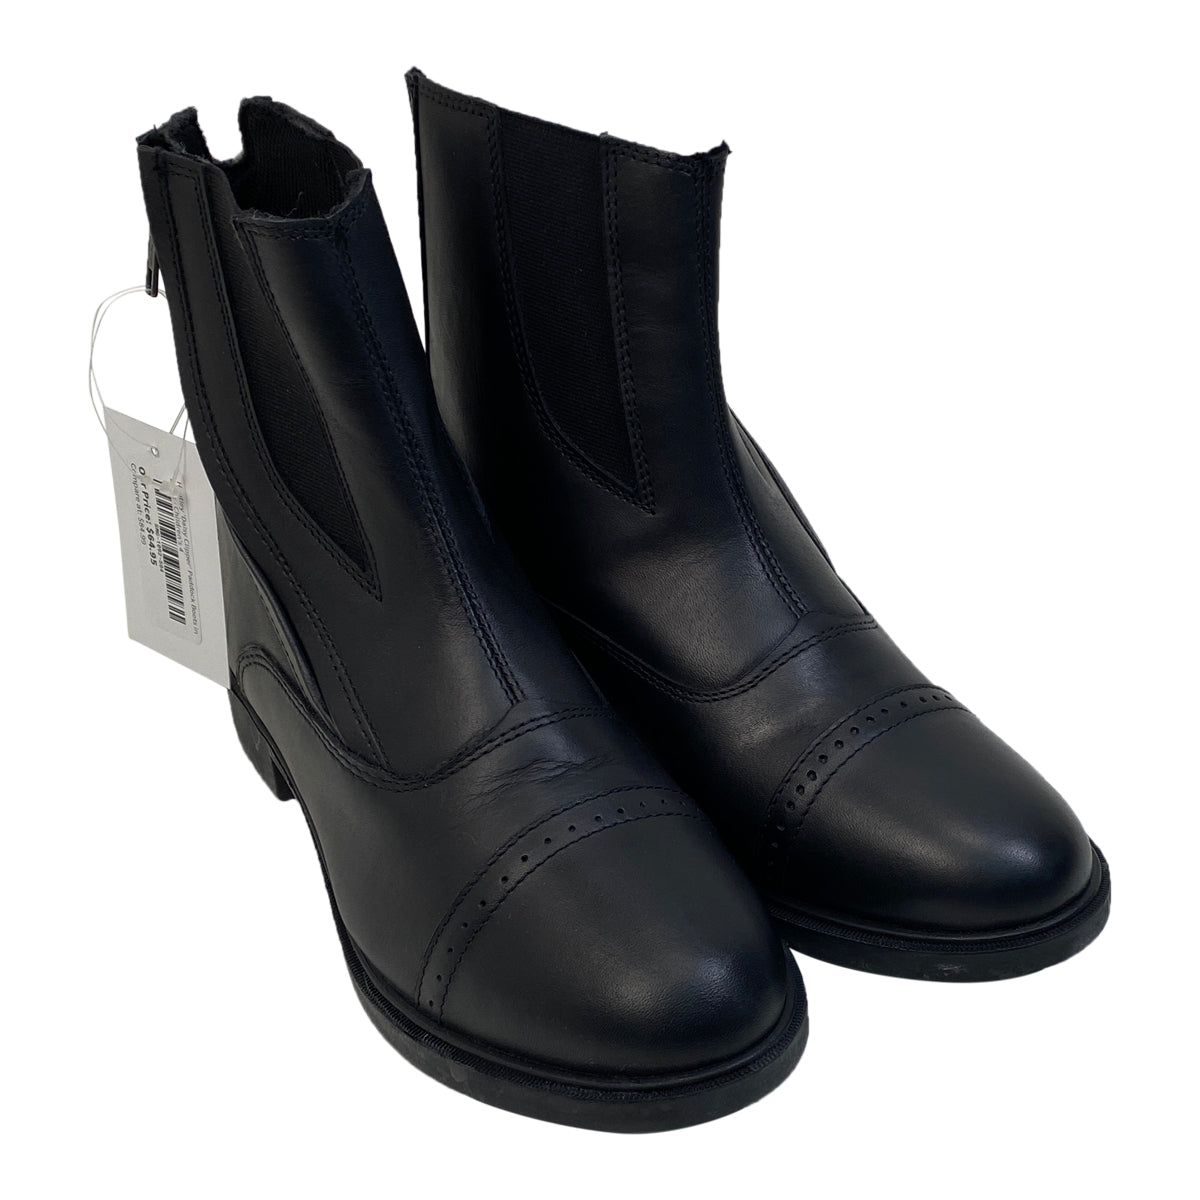 Huntley 'Daisy Clipper' Paddock Boots in Black